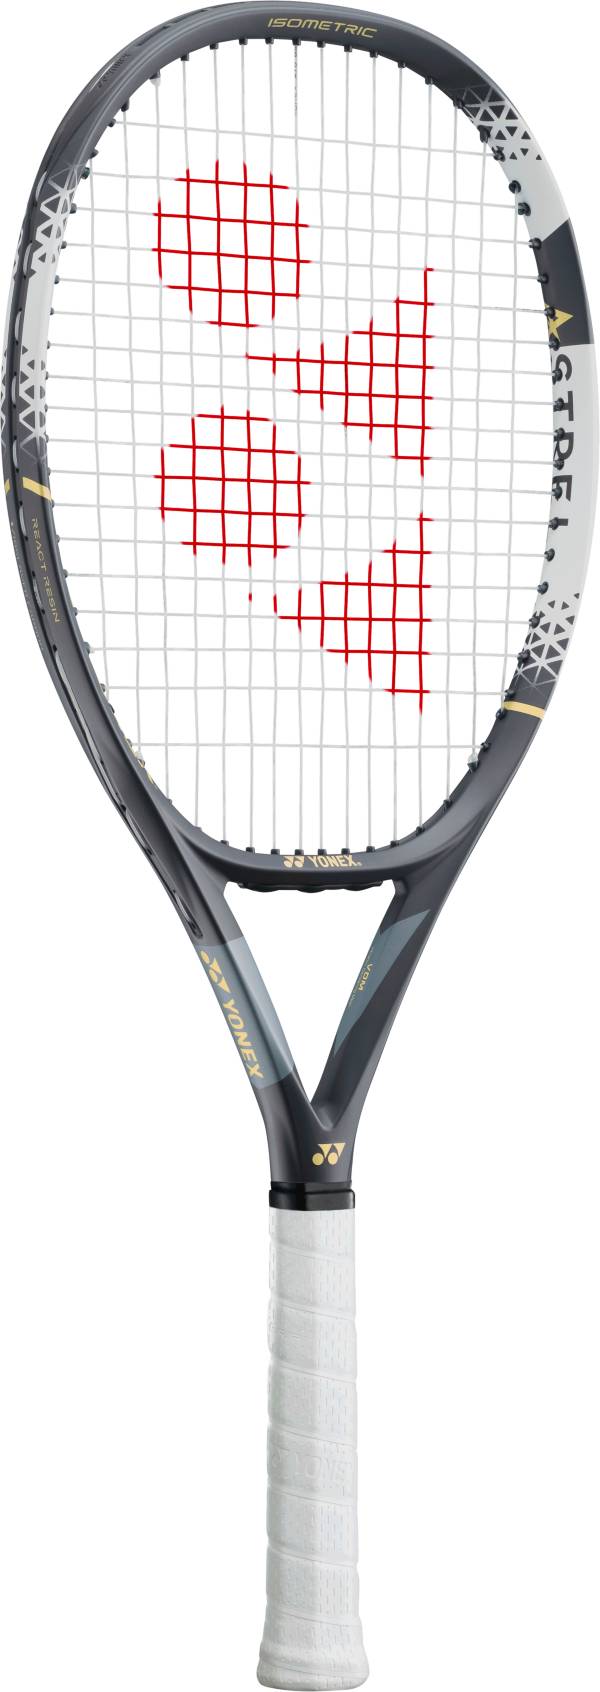 Yonex Astrel 105 Tennis Racquet product image